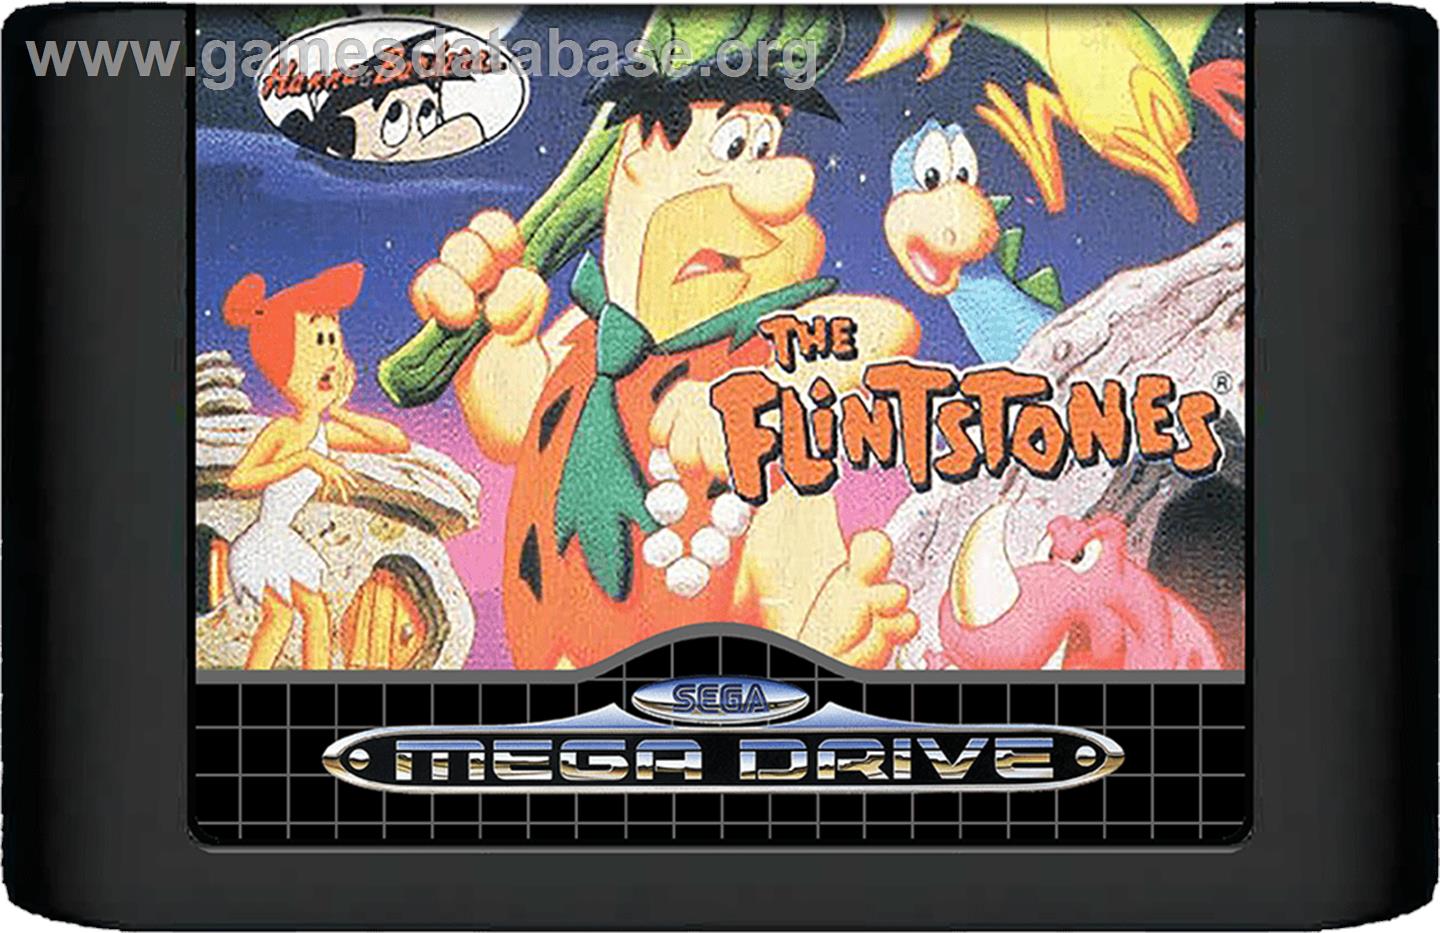 Flintstones, The - Sega Genesis - Artwork - Cartridge